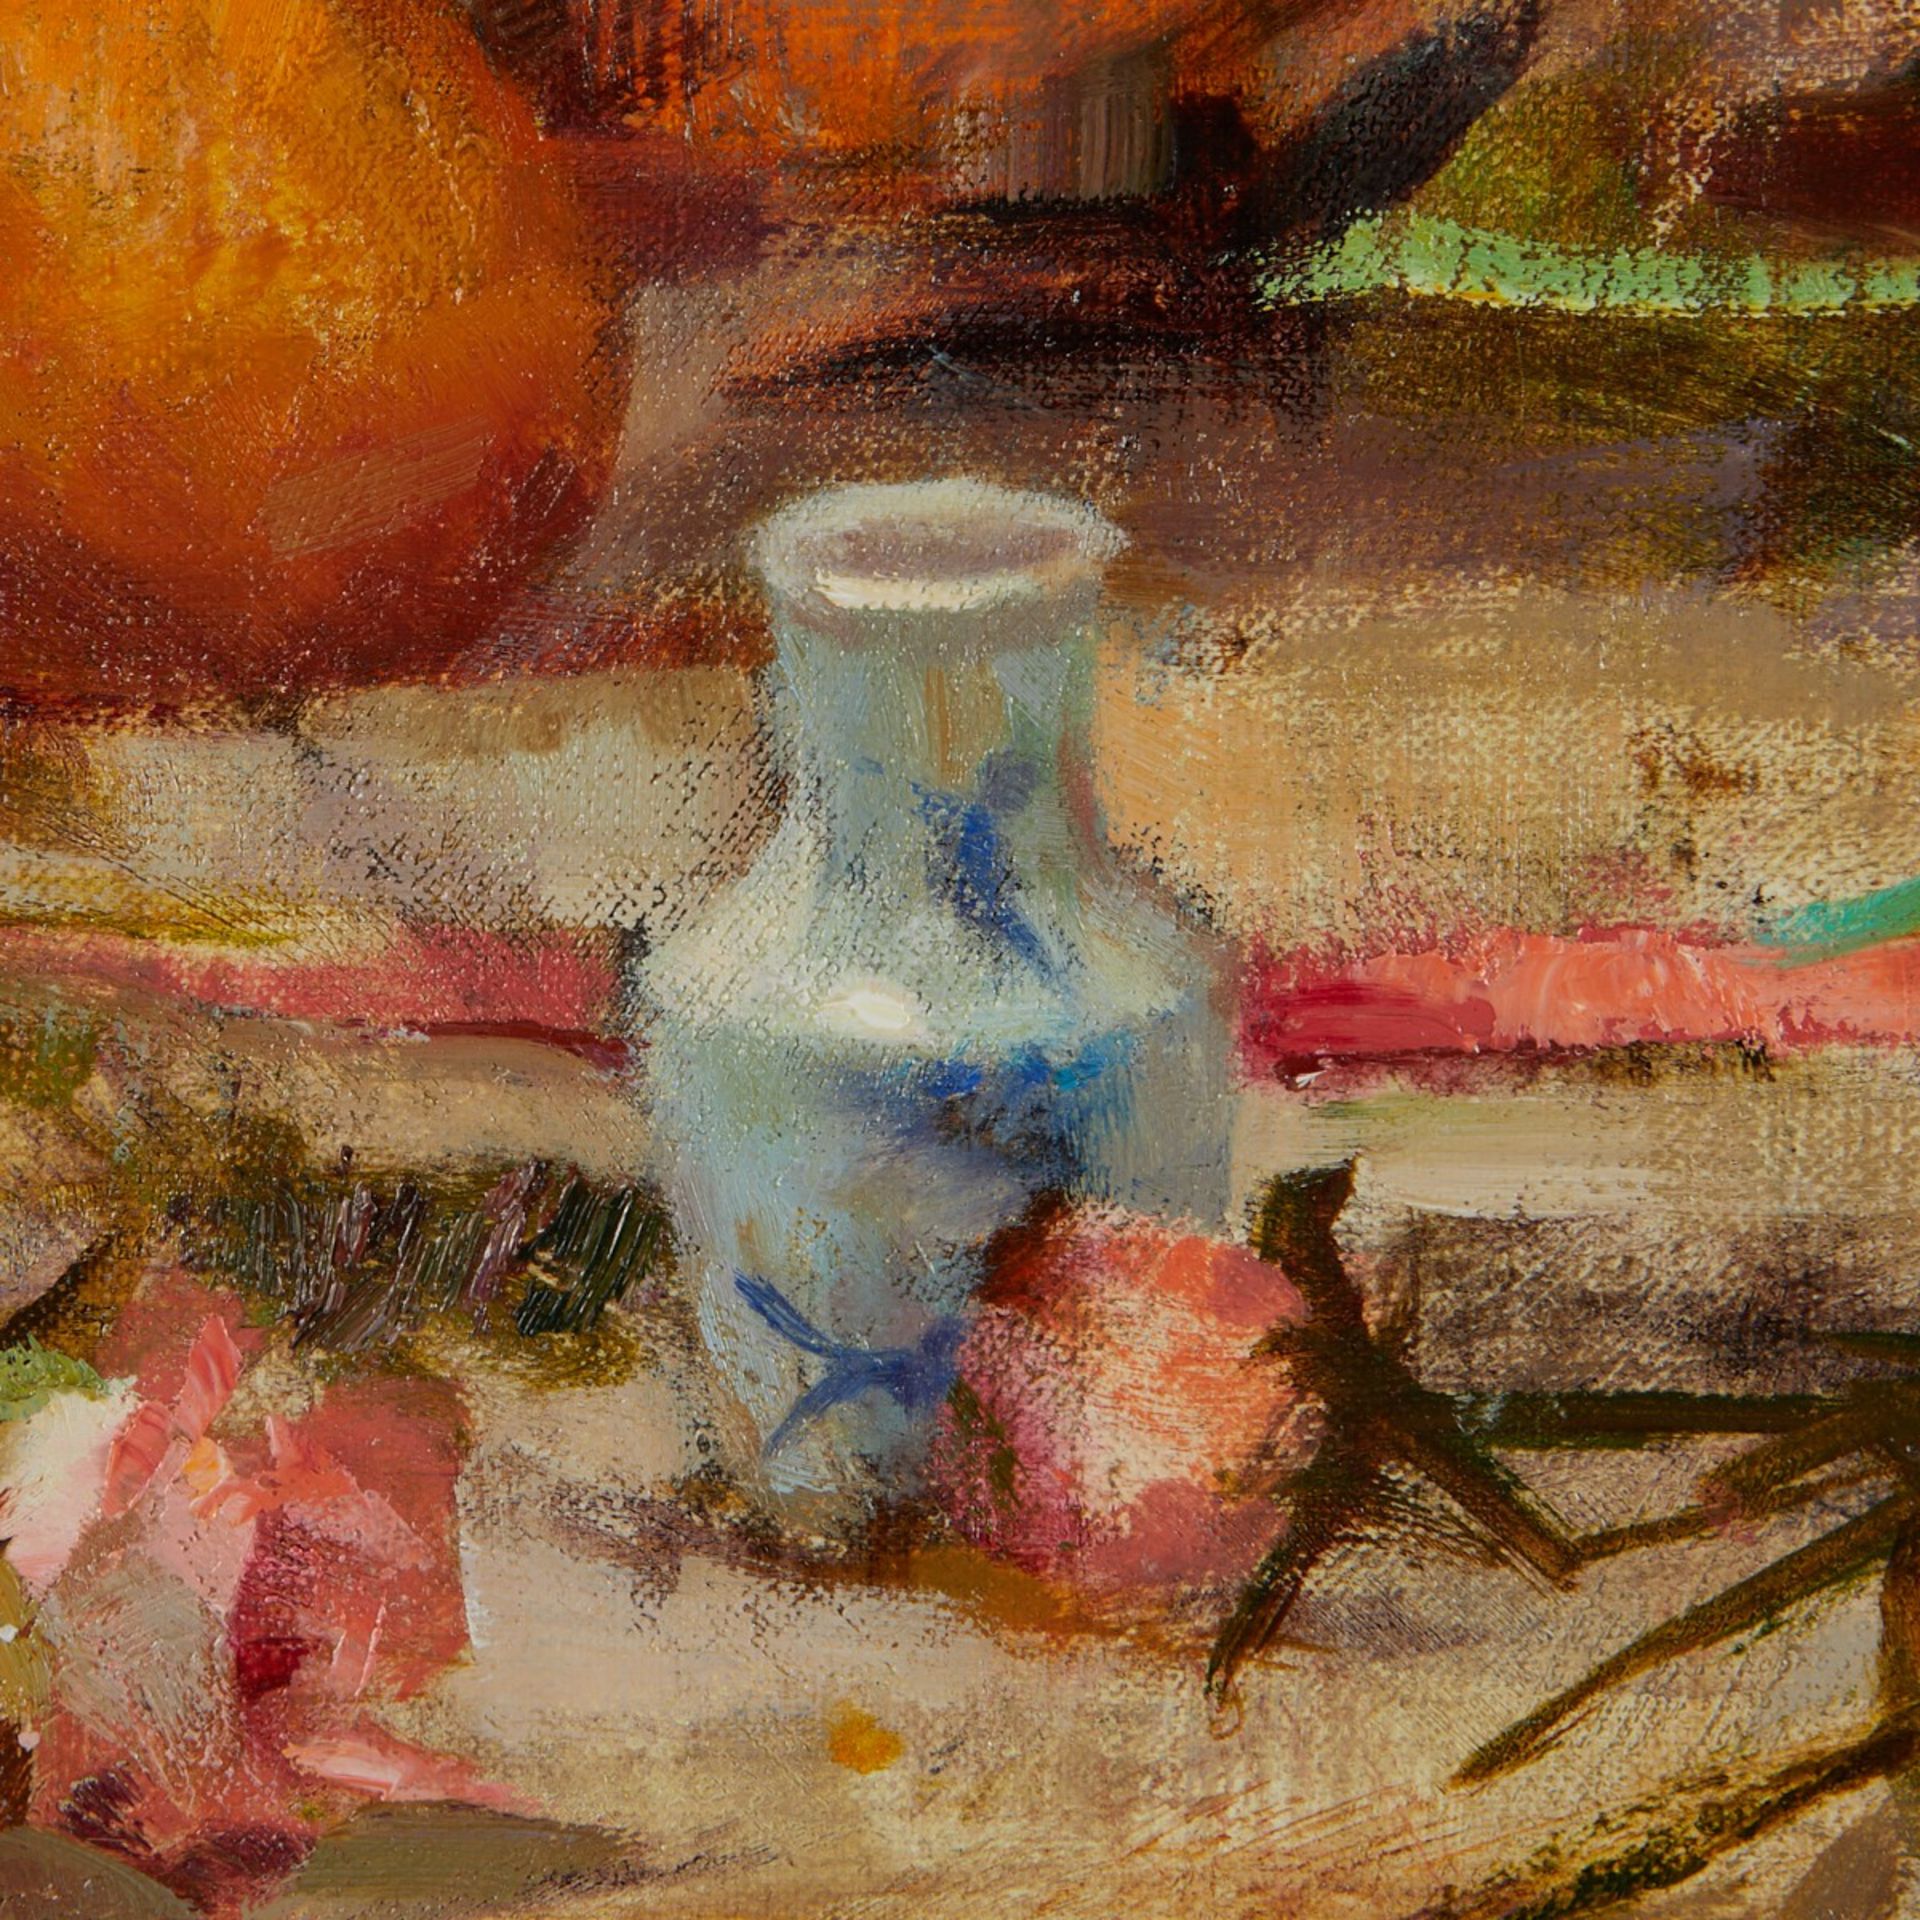 Ron Barsano "White Rose" Oil on Canvas - Image 5 of 7